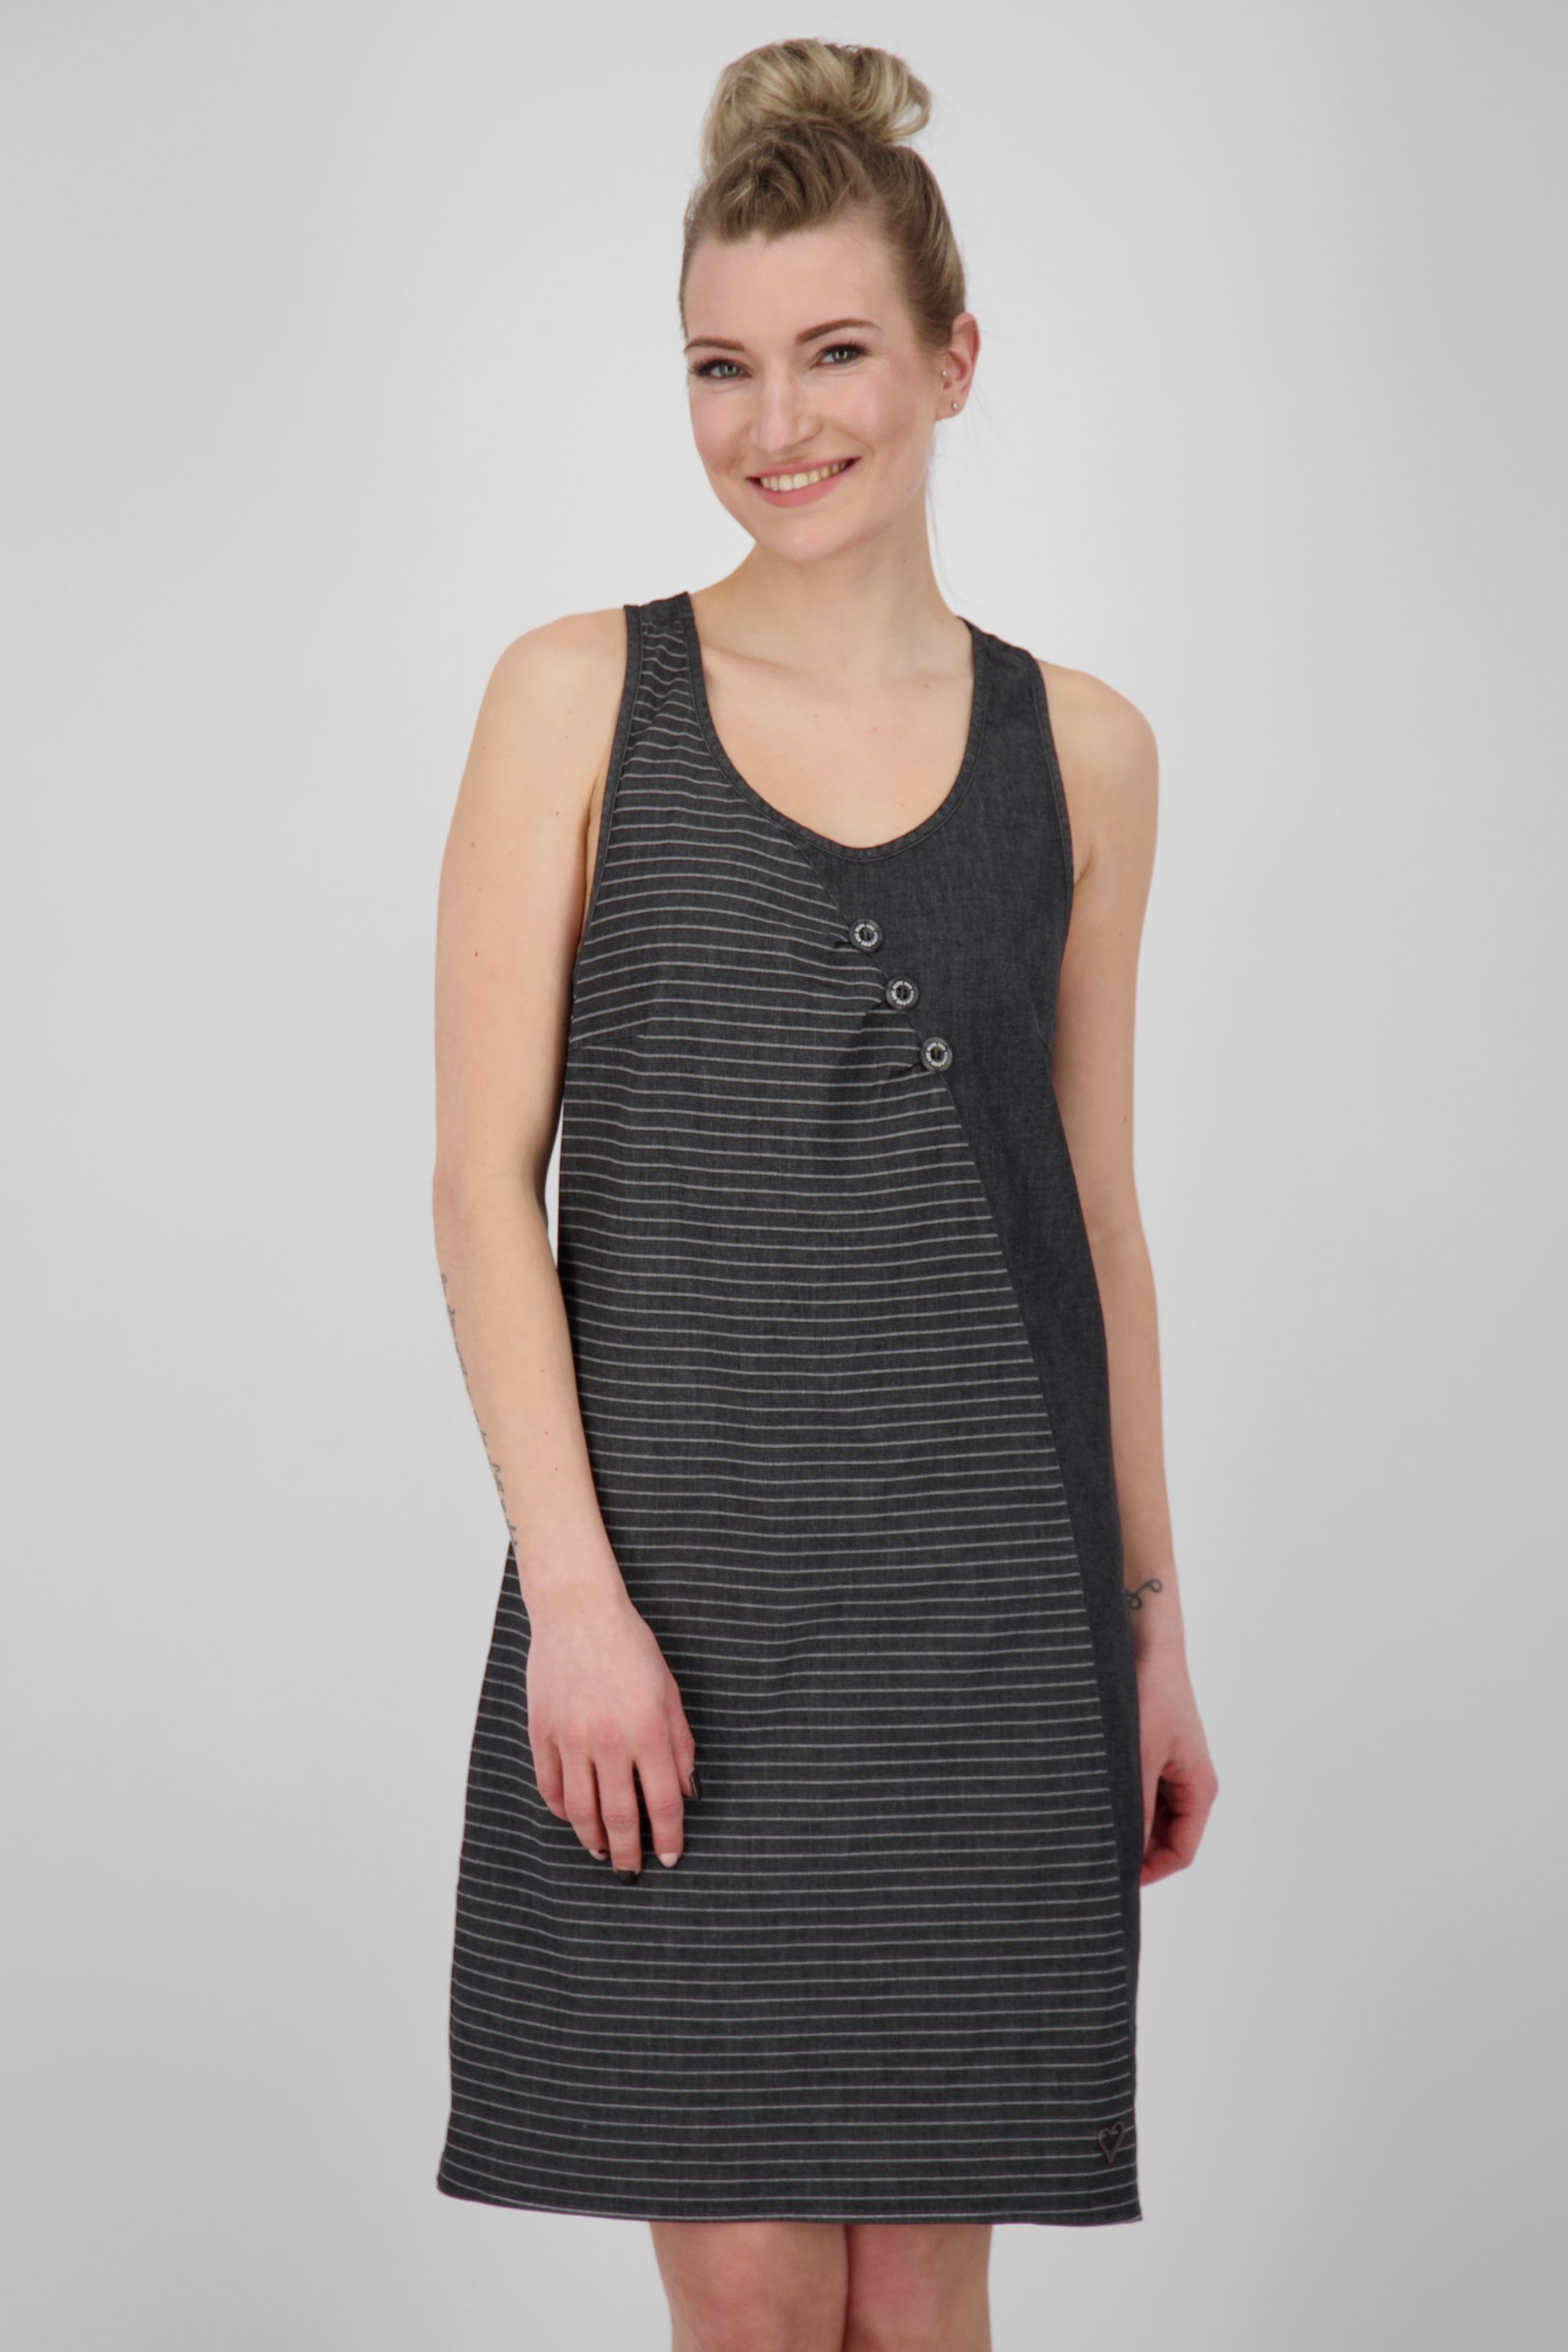 Outlet-Store im Ausland Alife & Kickin Sommerkleid CameronAK denim Damen Top Sommerkleid, Kleid black DNM B Dress